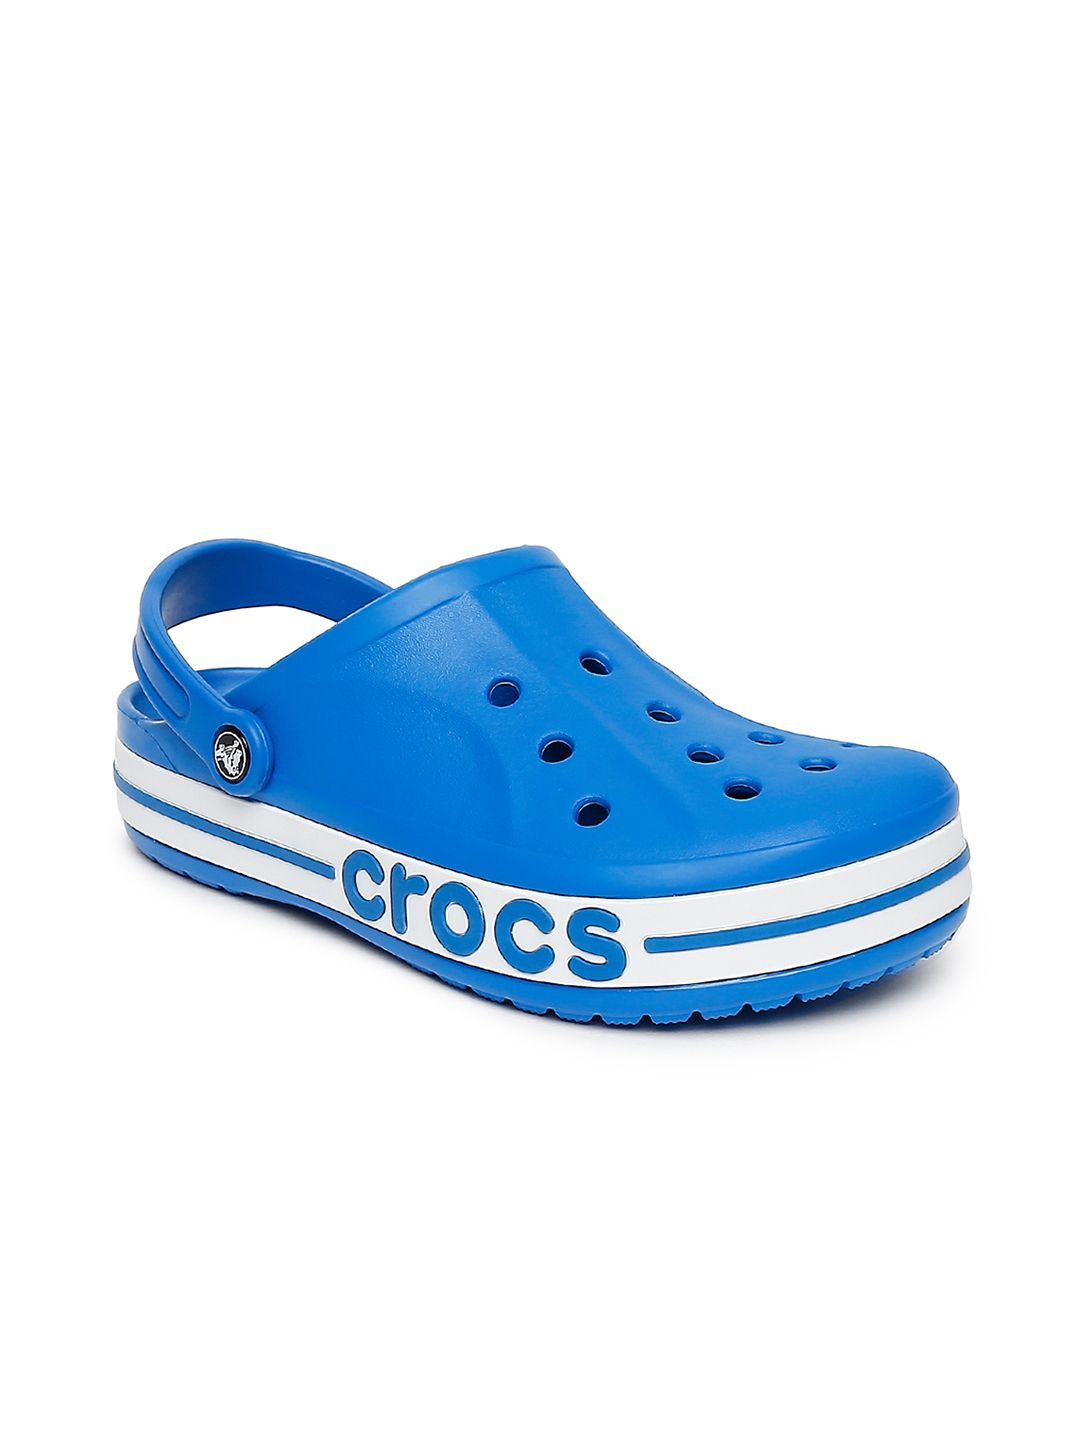 Crocs Bayaband Unisex Blue Clogs Price in India